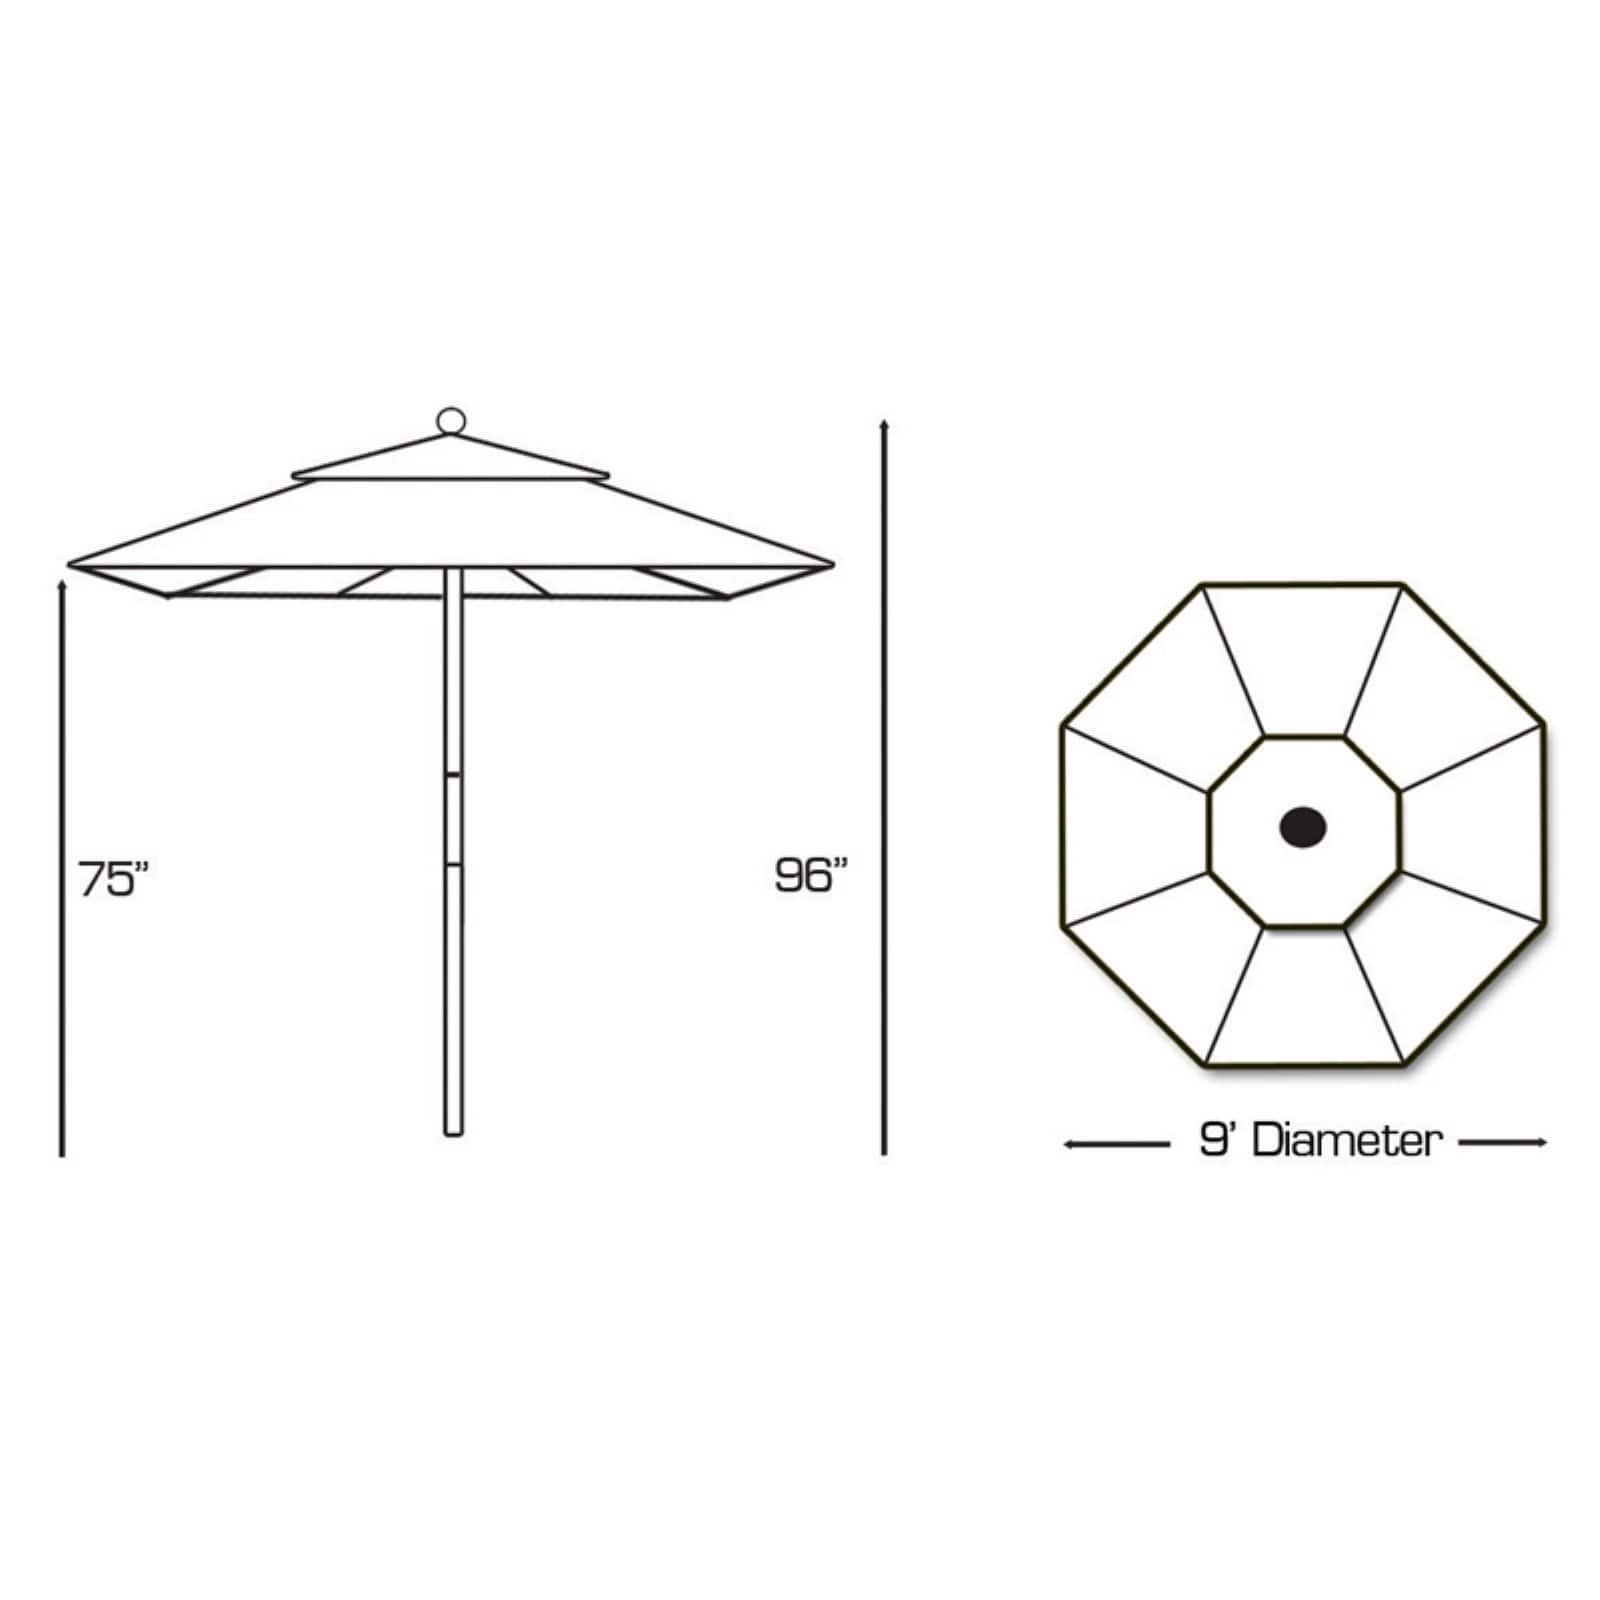 Galtech 9-ft. Double Pulley Sunbrella Patio Umbrella - image 5 of 10